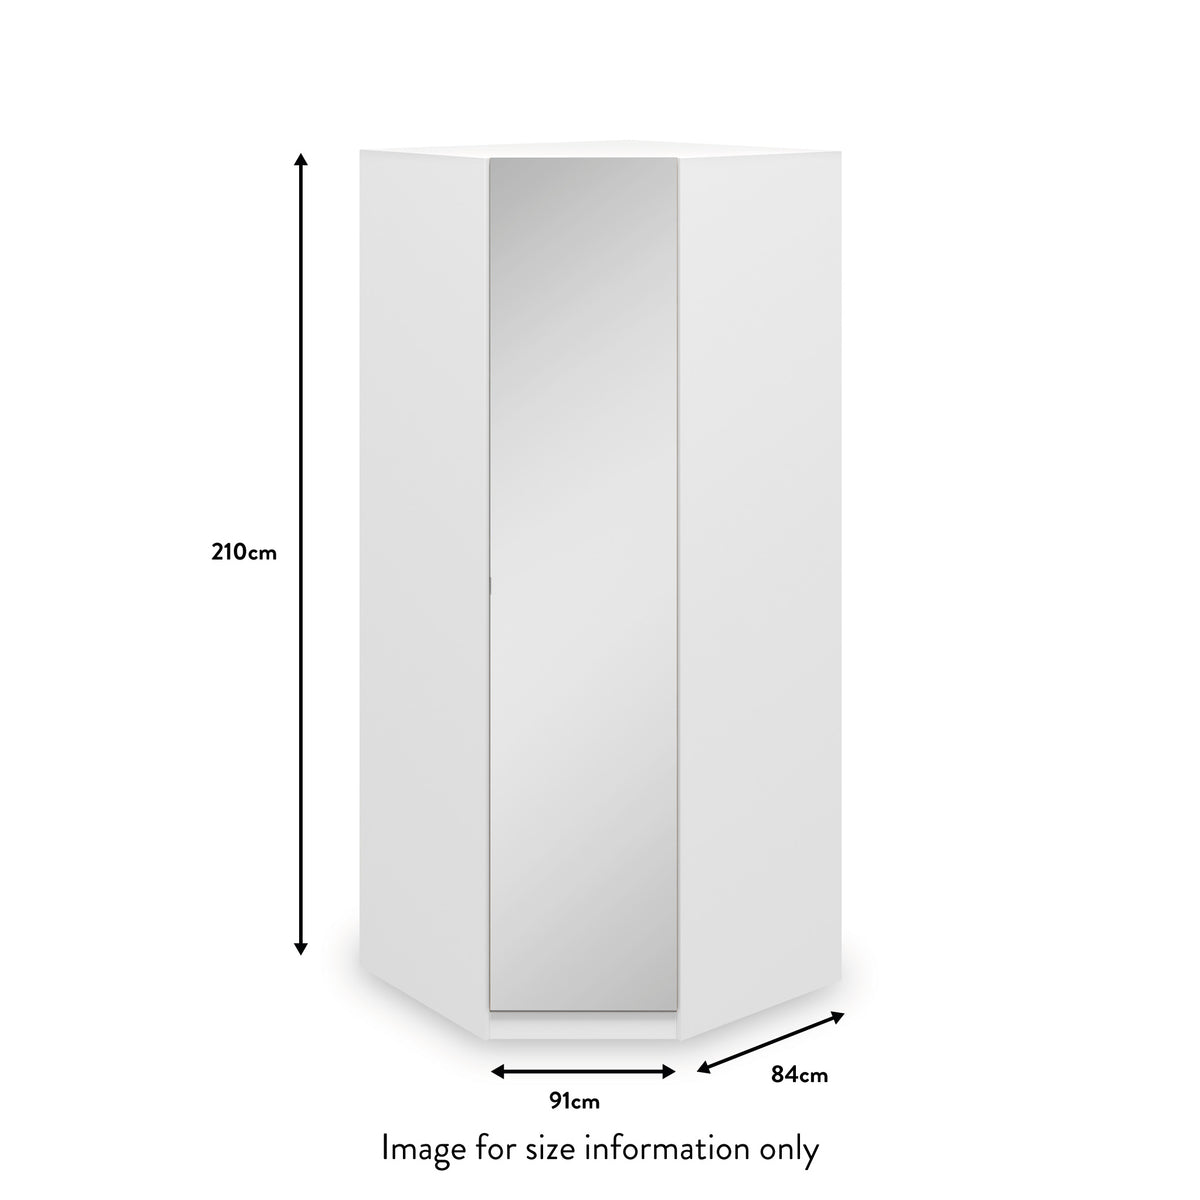 Meribel White Corner Mirrored Wardrobe dimensions